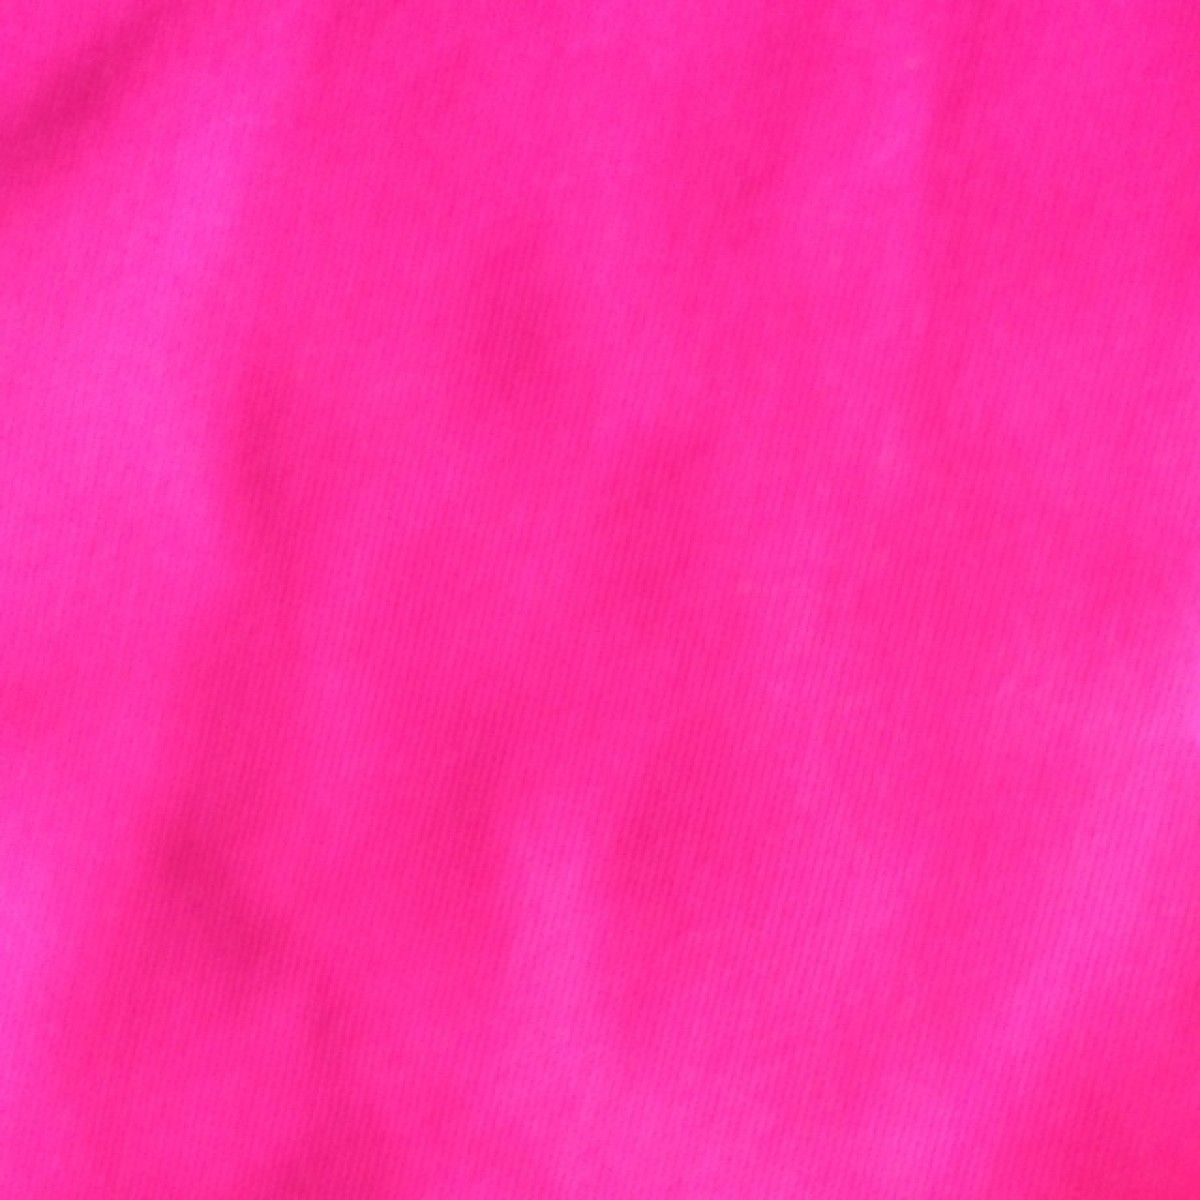 Neon Pink Background Wallpaper